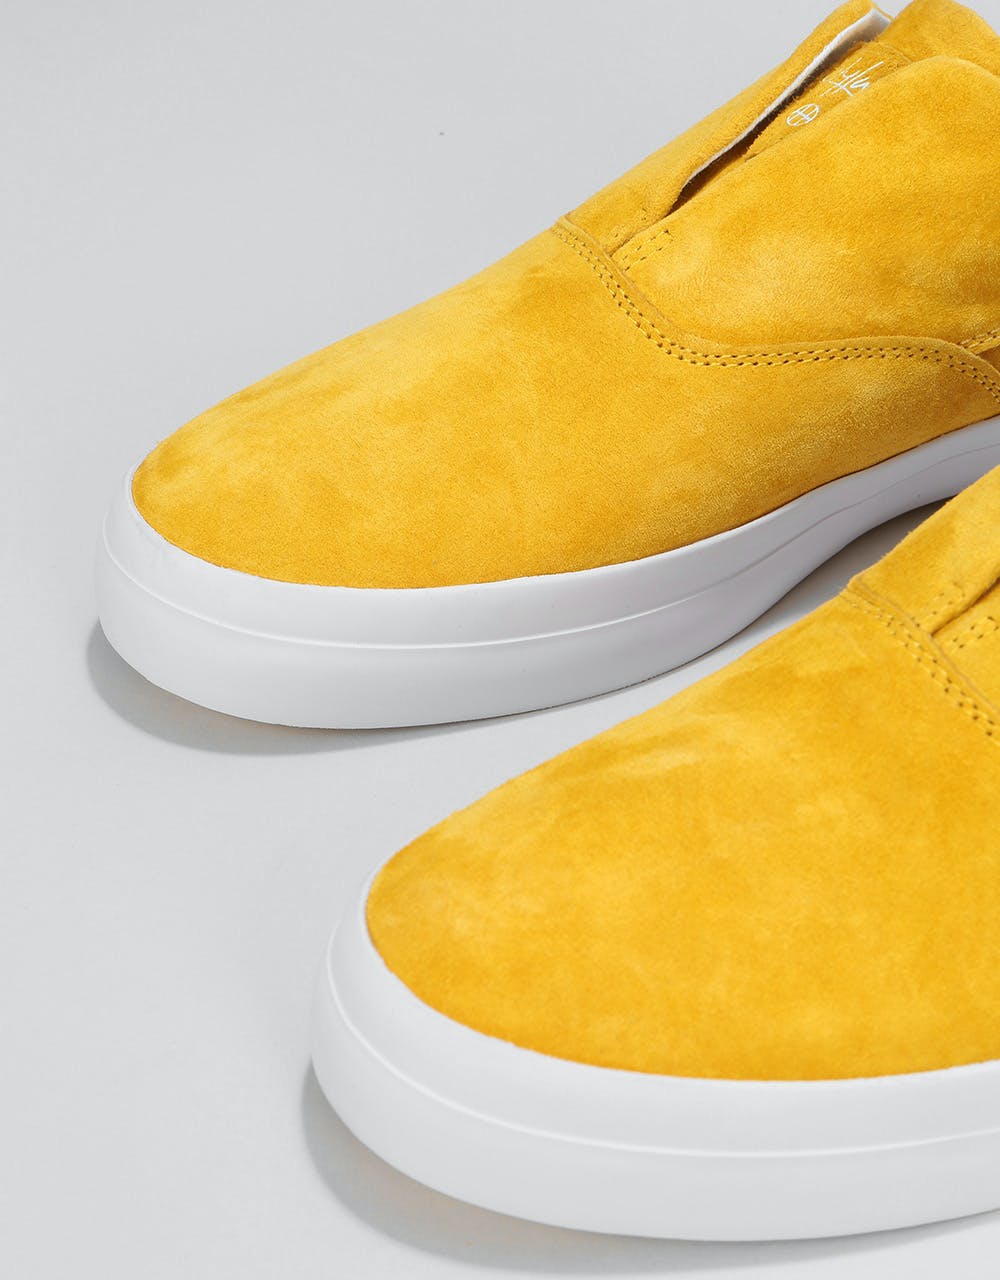 HUF Dylan Slip On Skate Shoes - Yellow